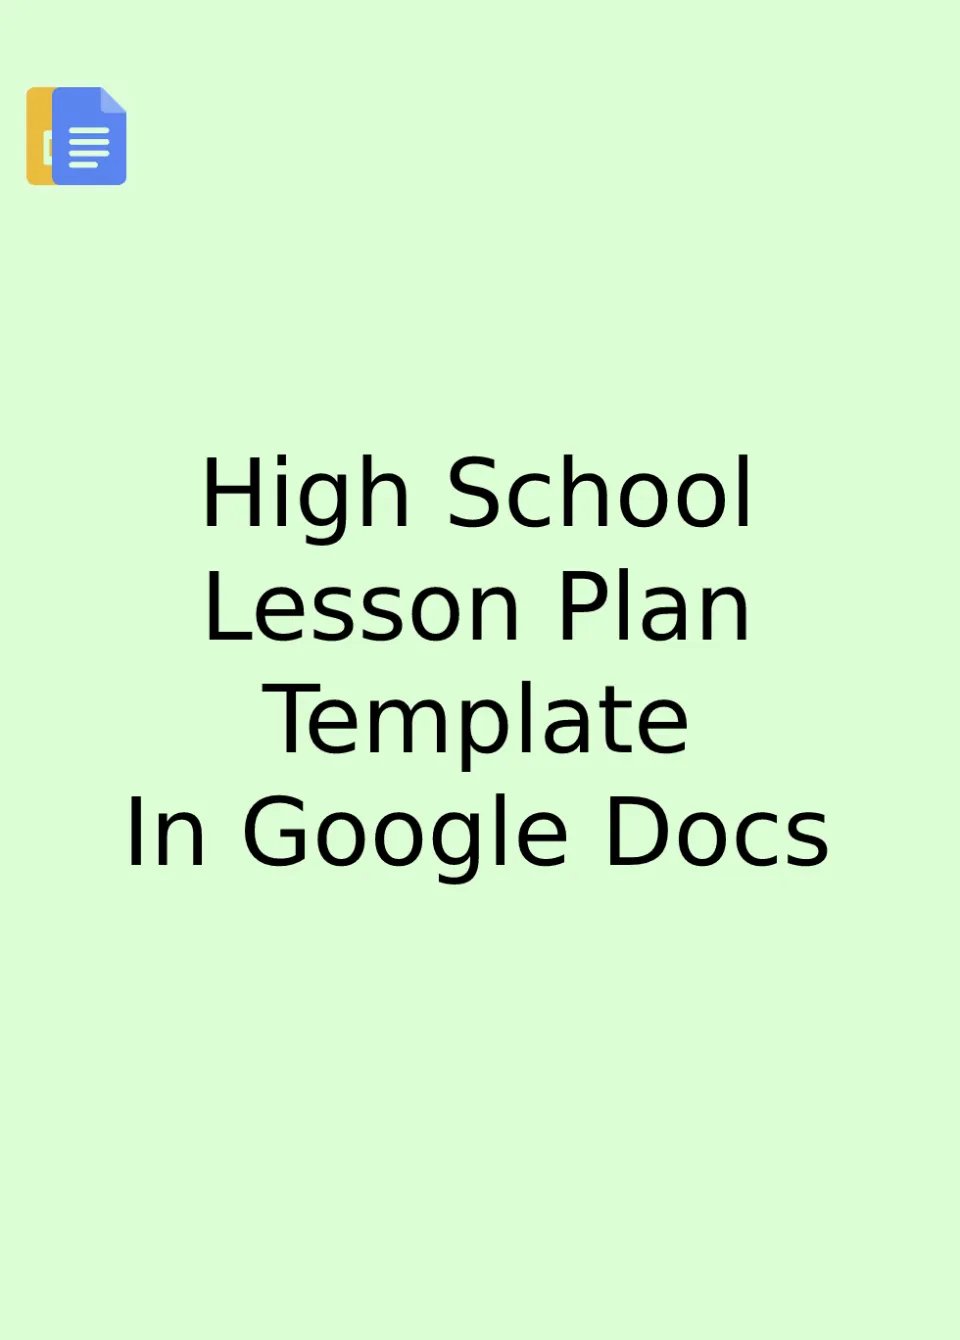 High School Lesson Plan Template Google Docs